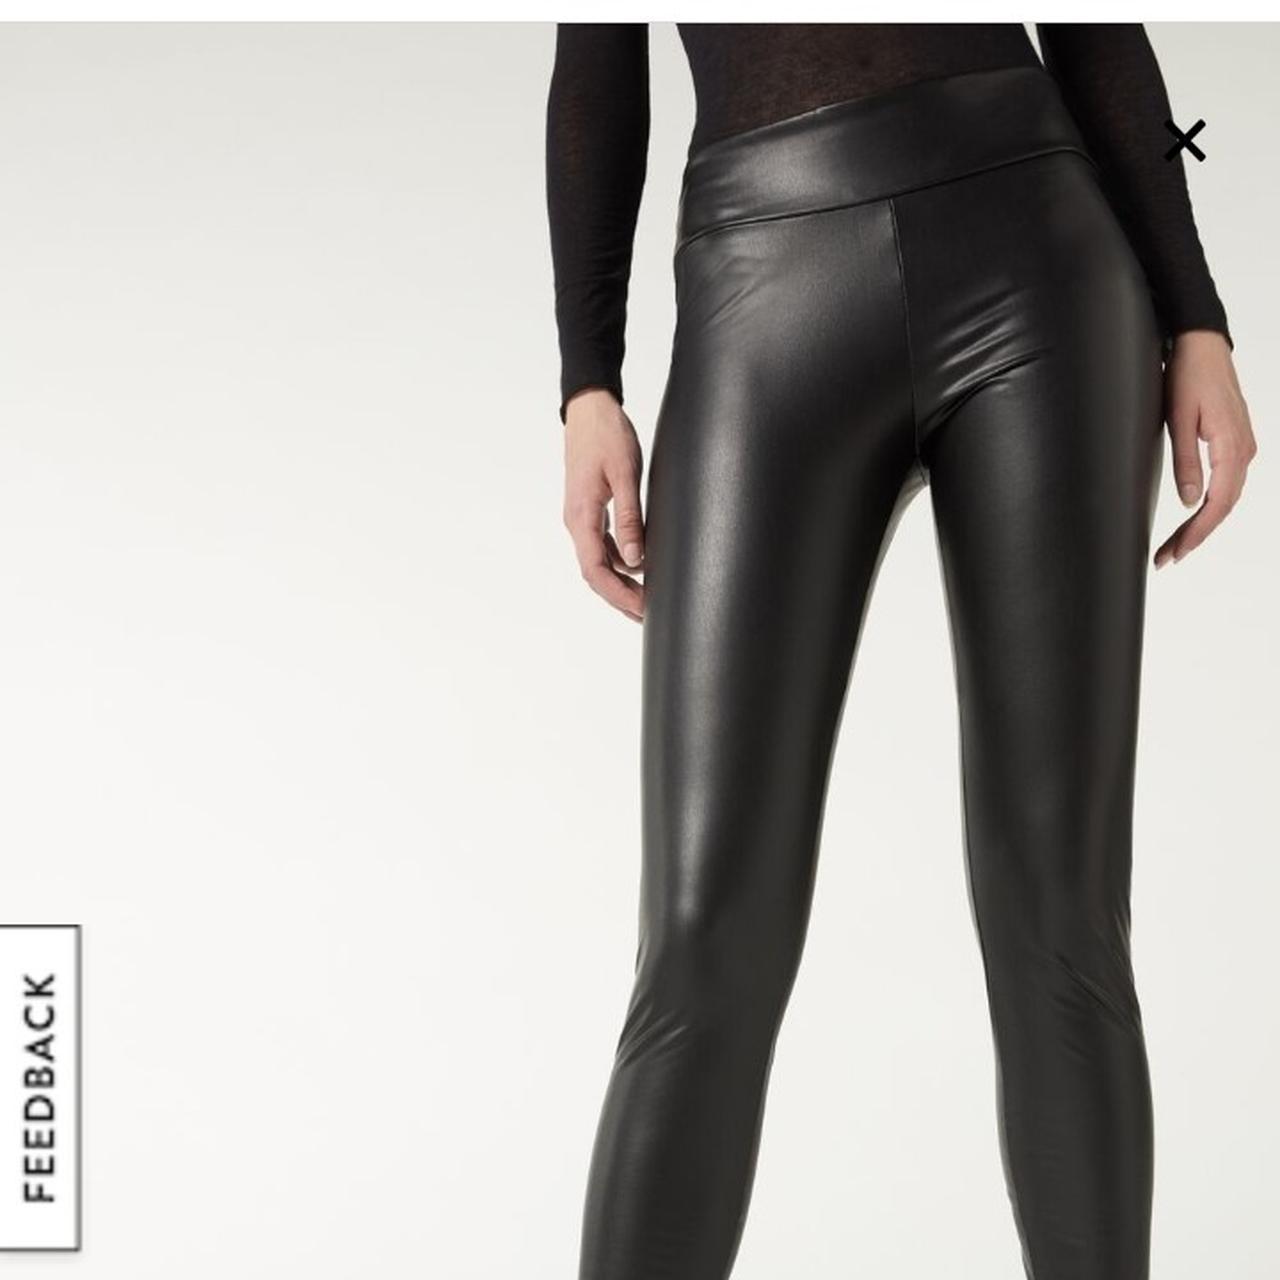 Calzedonia Leather Pants - Depop